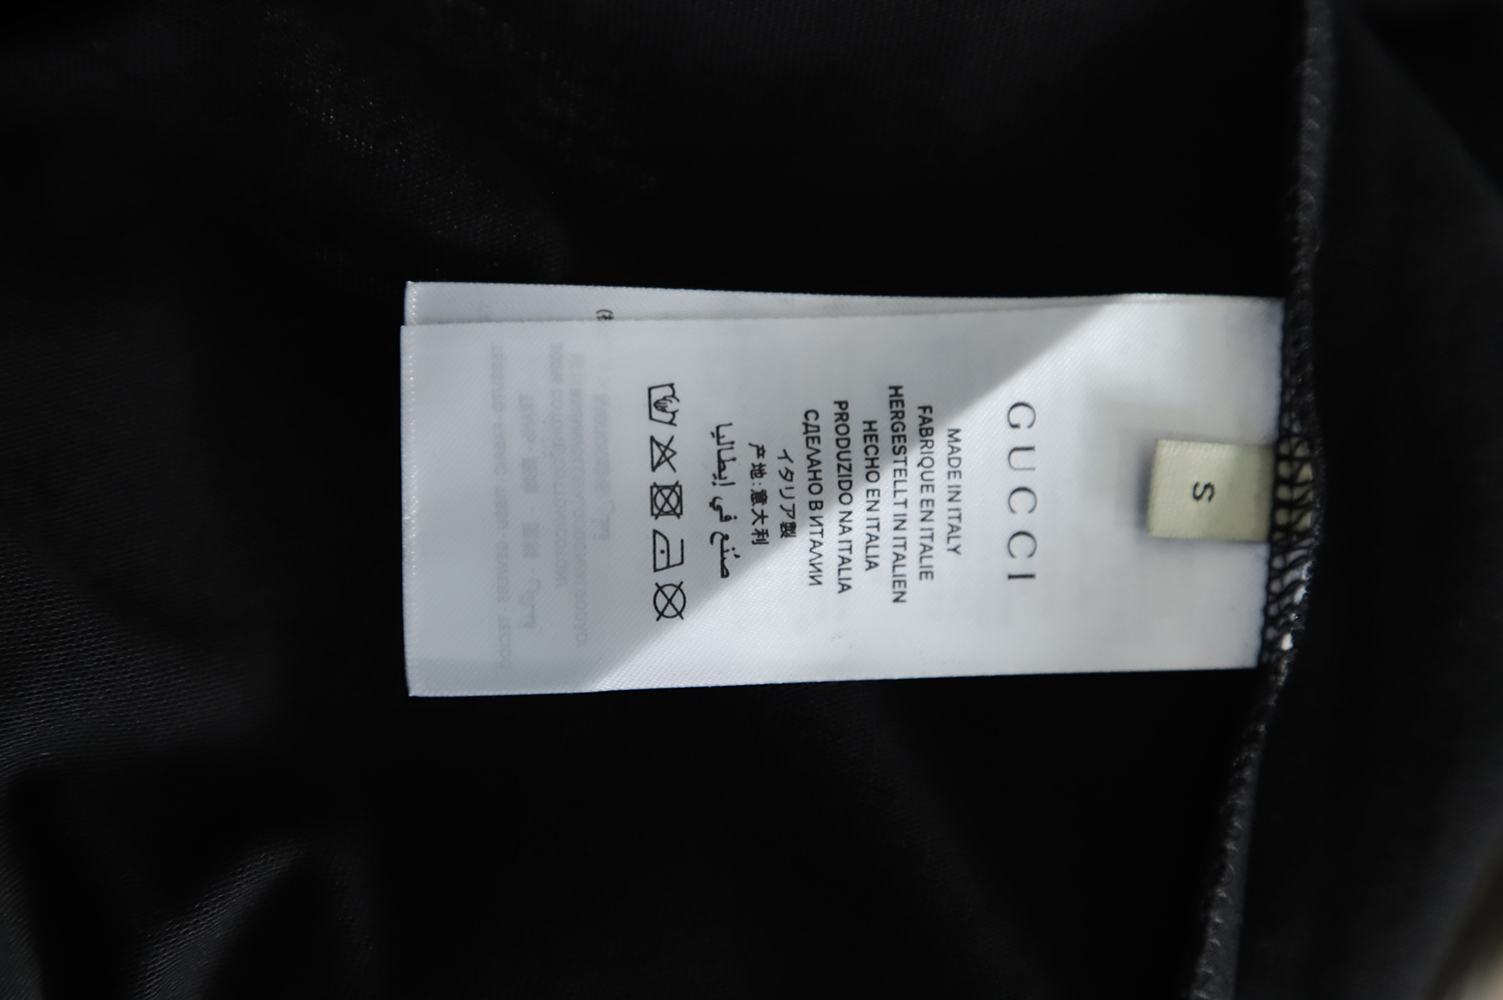 Gucci Chest Label Pocket Short Sleeve T-Shirt TSK2